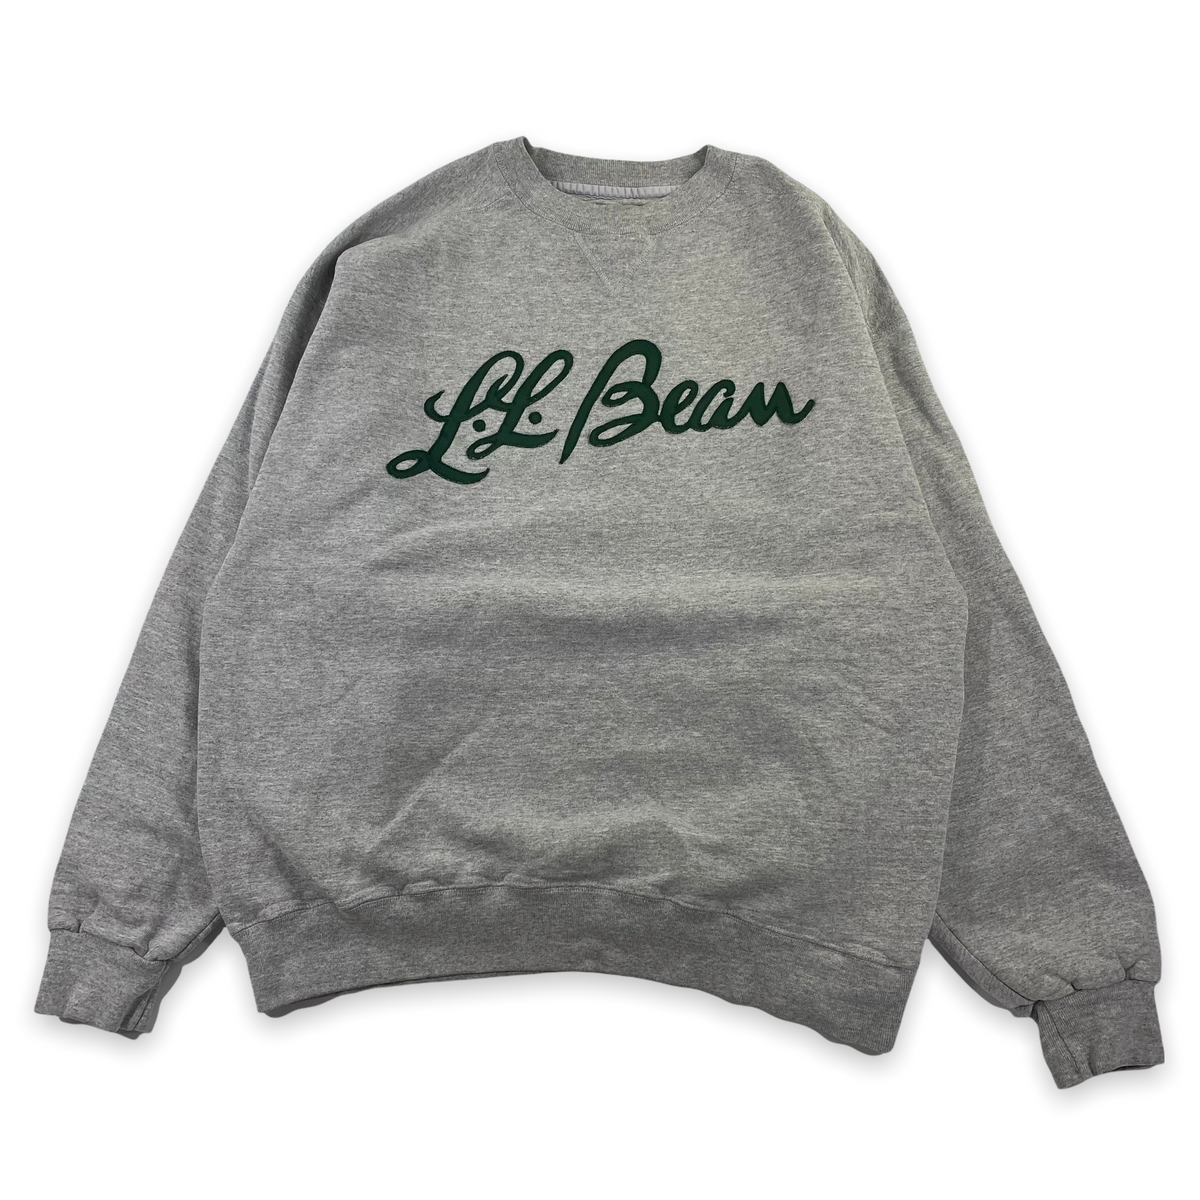 90s LL Bean script logo russell sweatshirt. Sz large – Vintage Sponsor